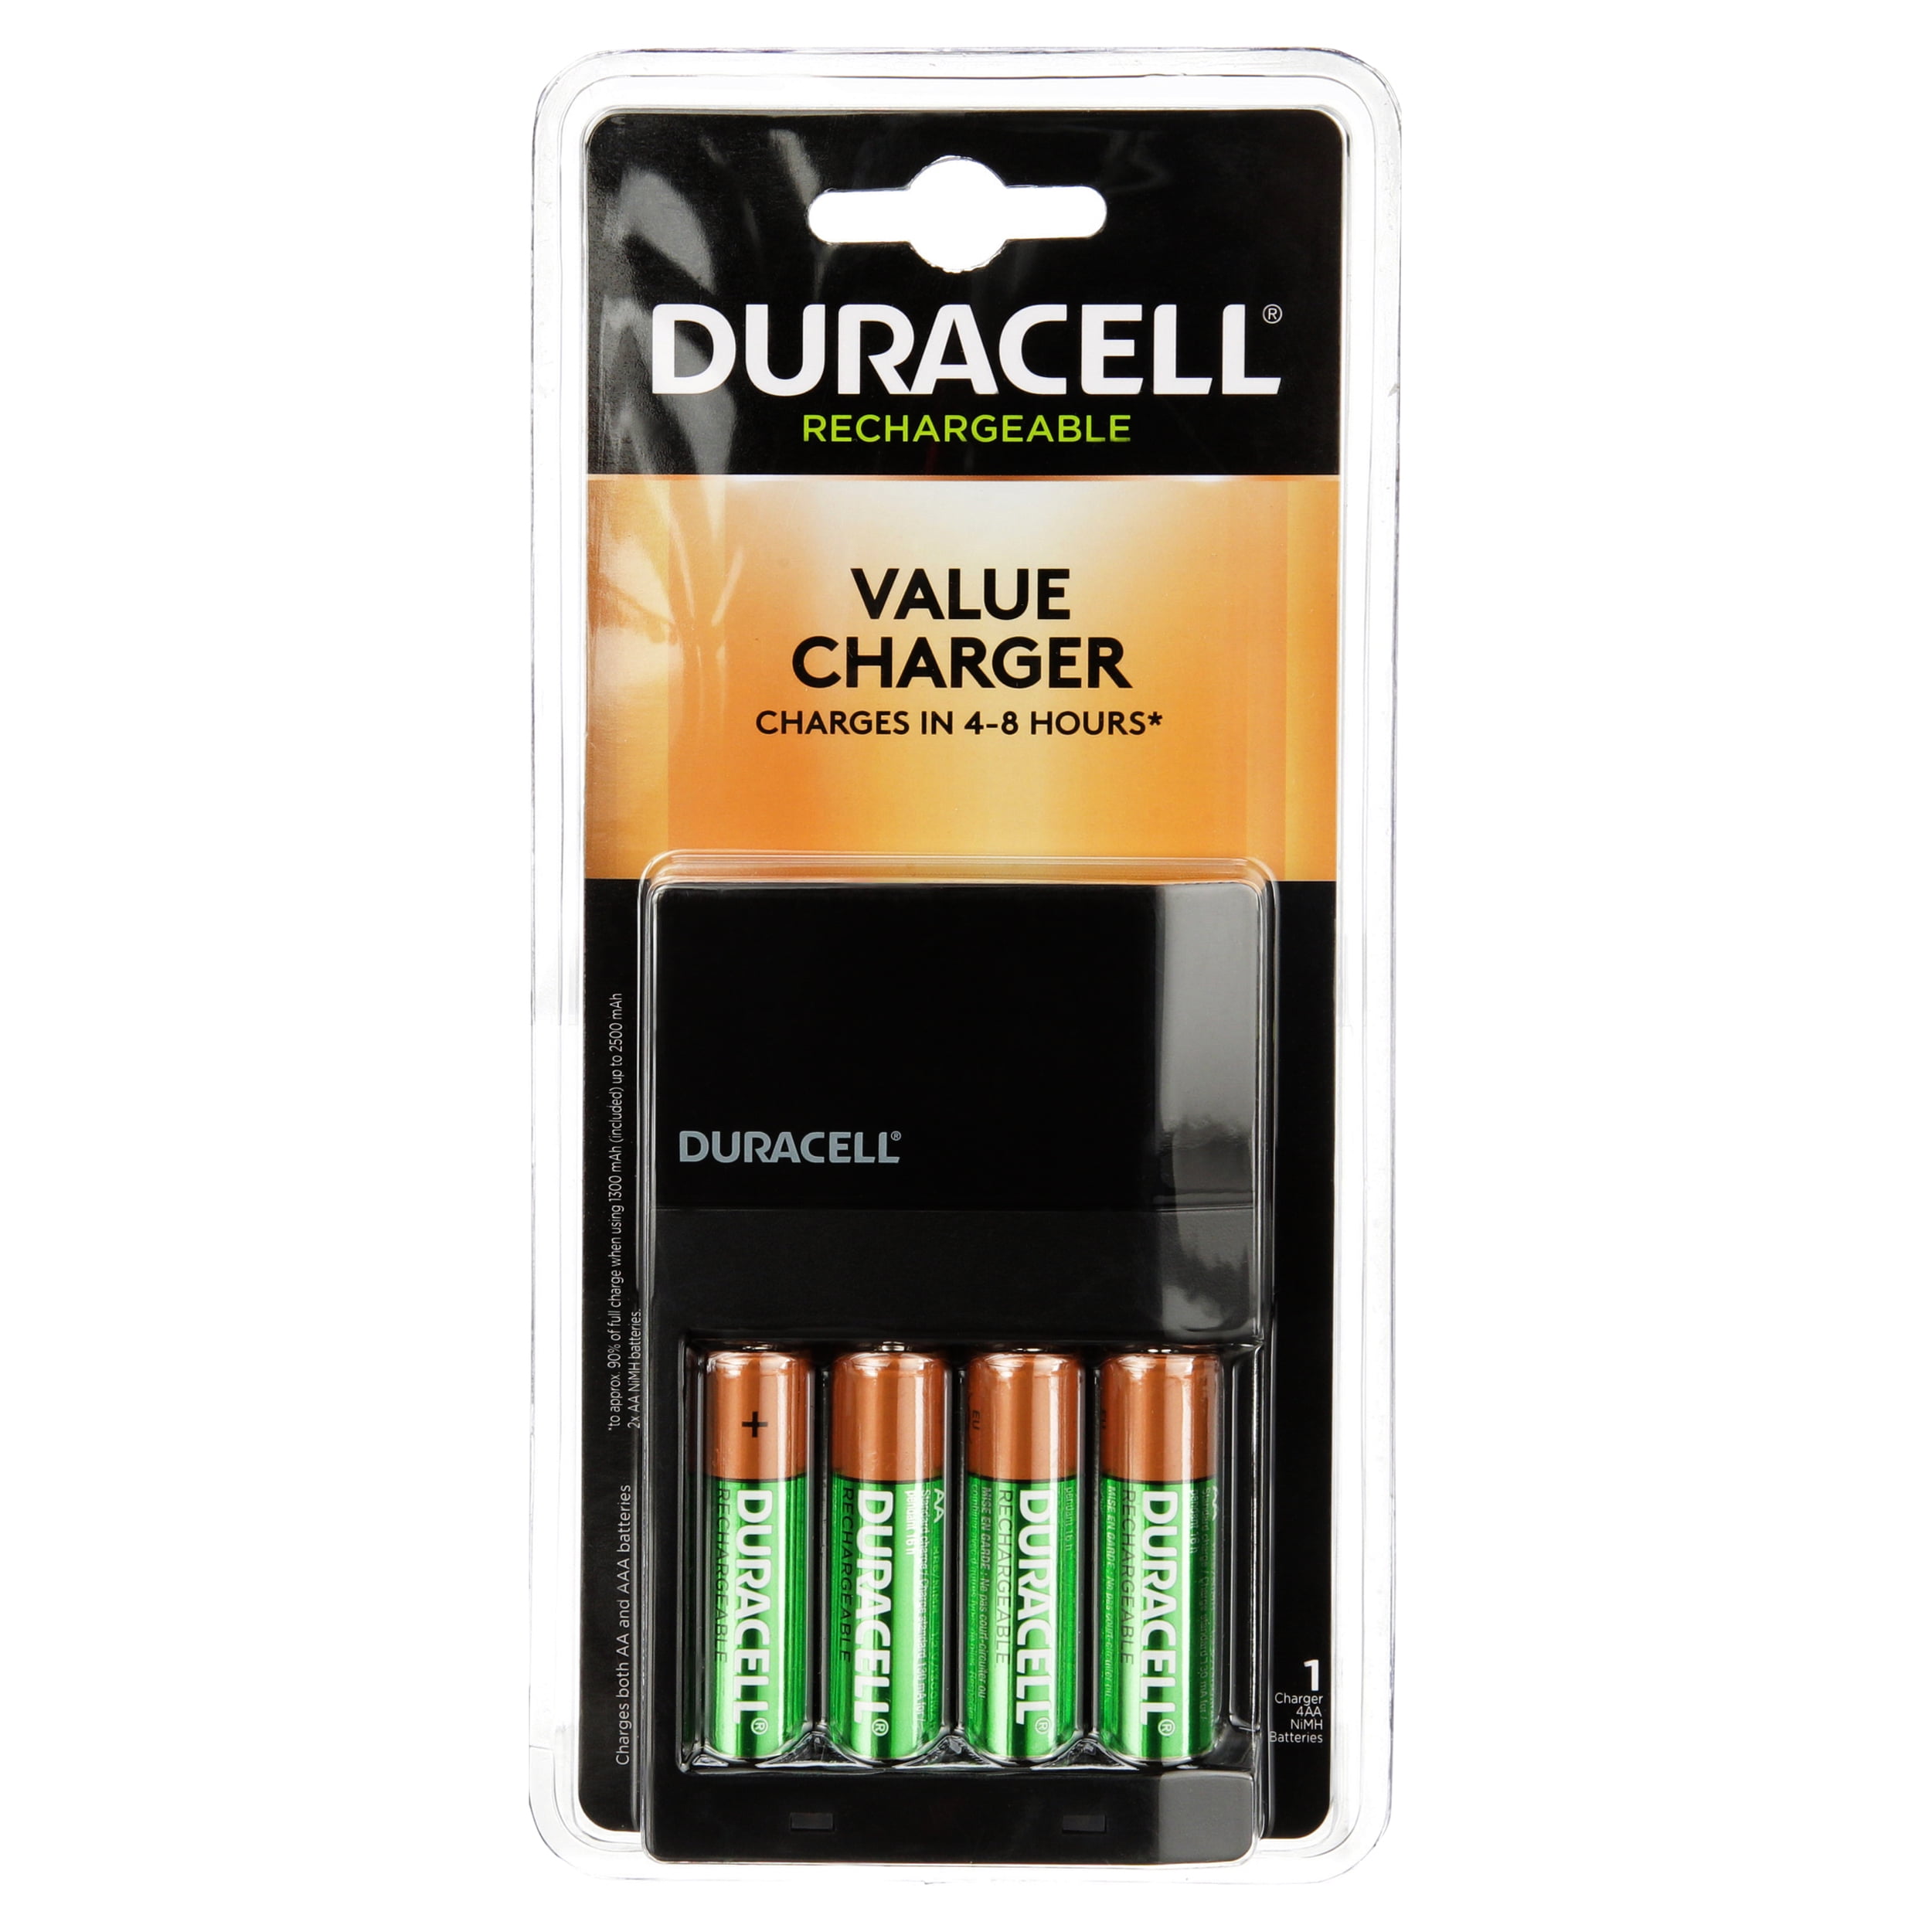 Hinder Regeren Wijde selectie Duracell ION SPEED 1000 Rechargeable Battery Charger, Includes 4 AA NiMH  Batteries - Walmart.com